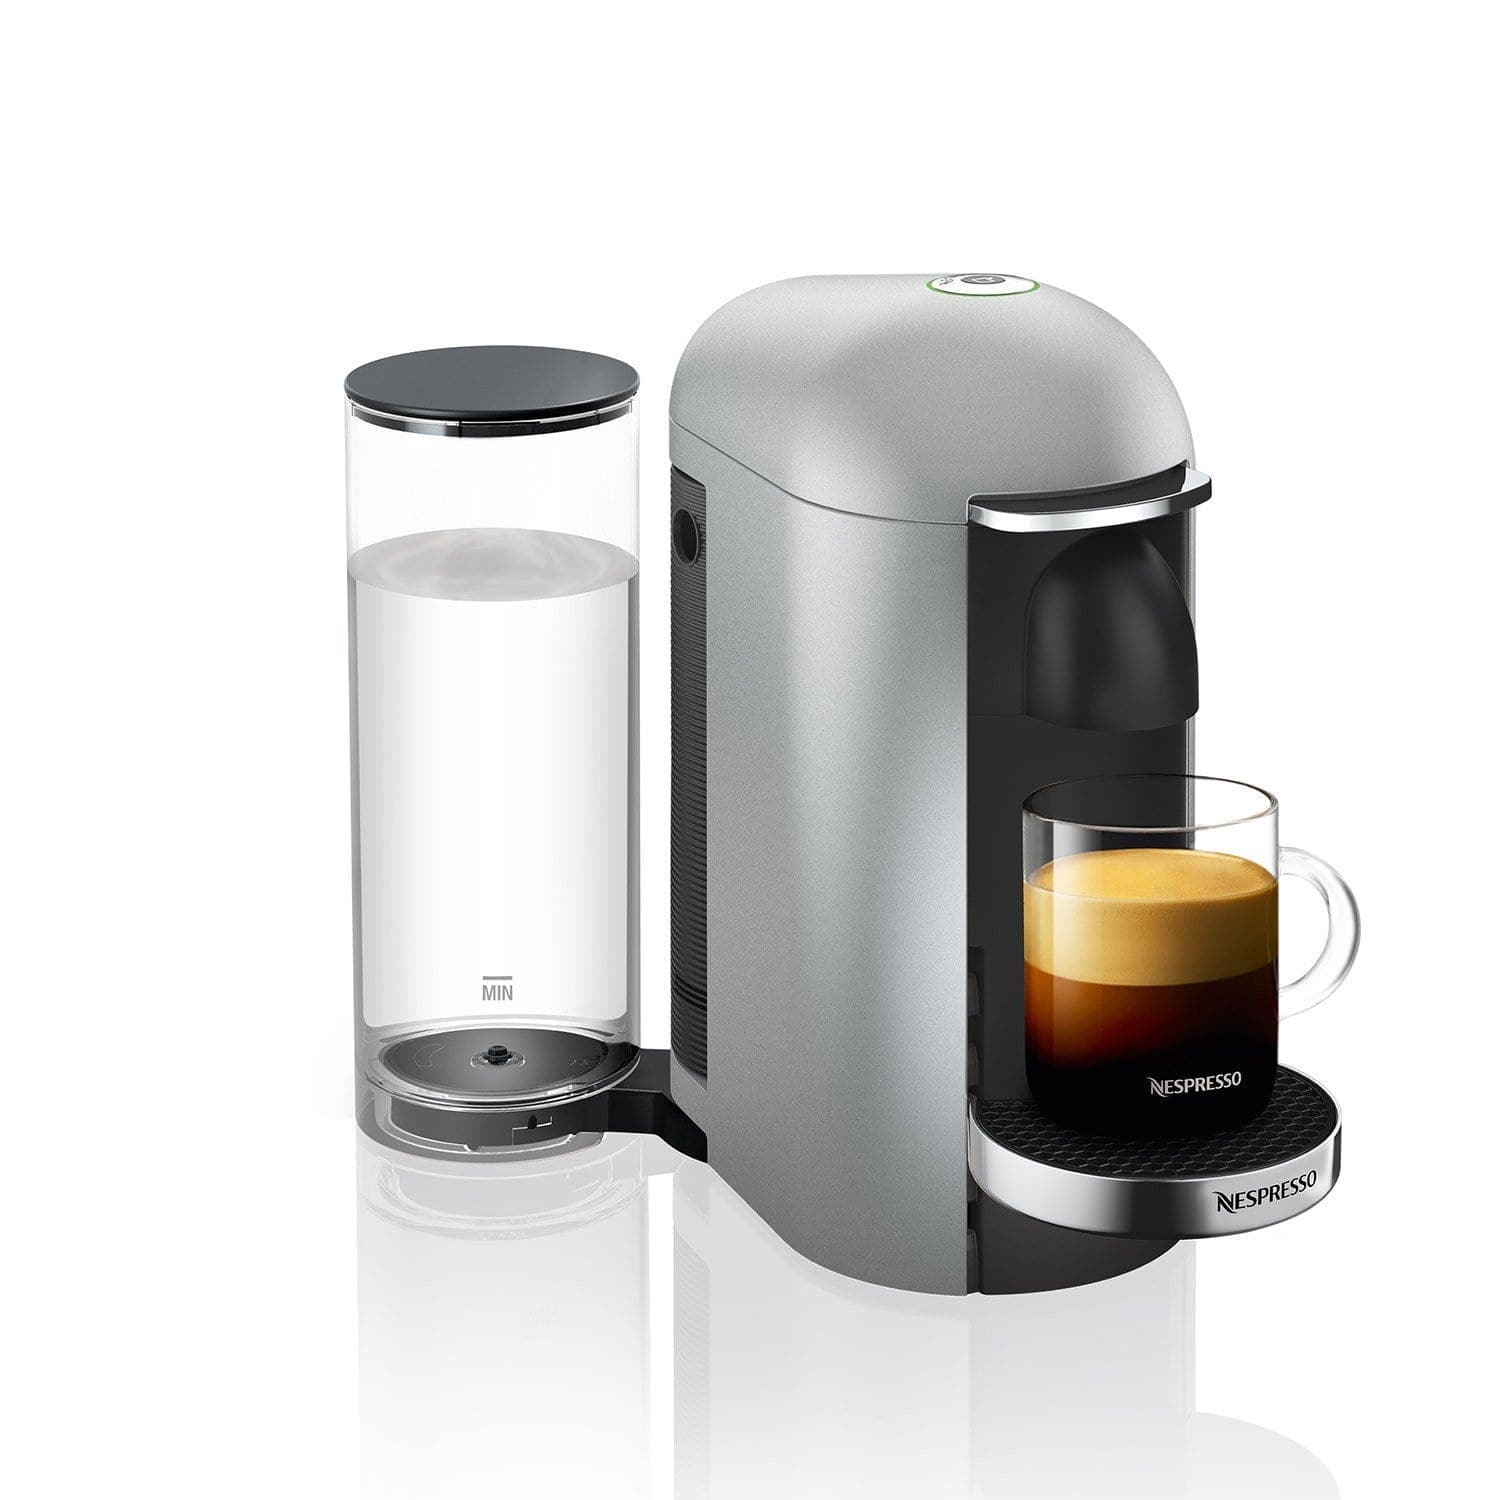 Nespresso ماكينة صنع القهوة Vertuo Plus - فضي ديلوكس وأسود هوائي - GCB2-BU-SI - Jashanmal Home